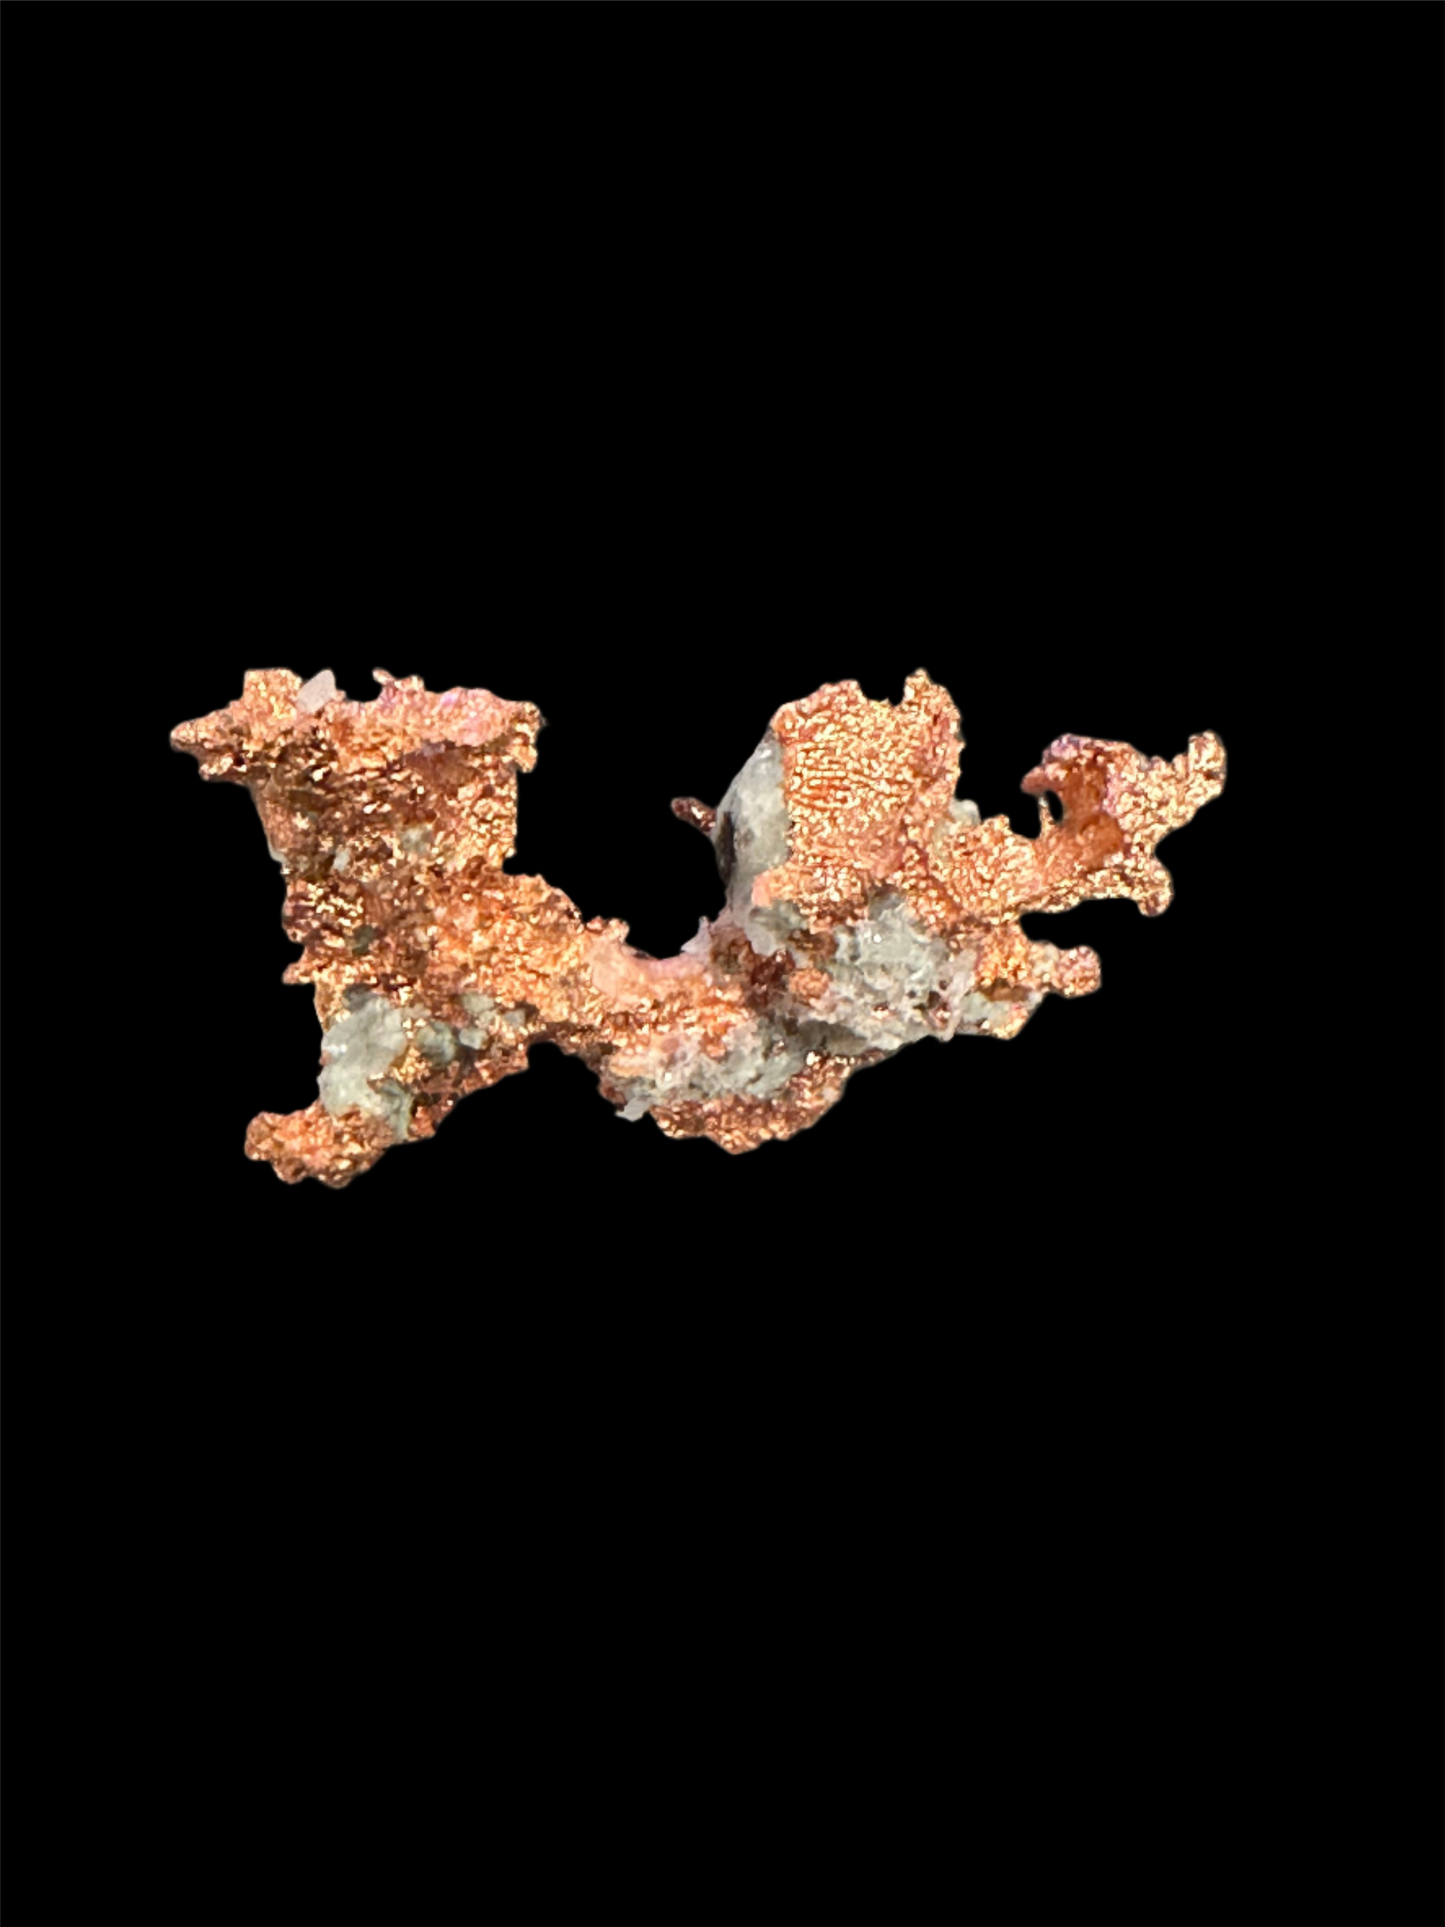 Copper with Feldspar